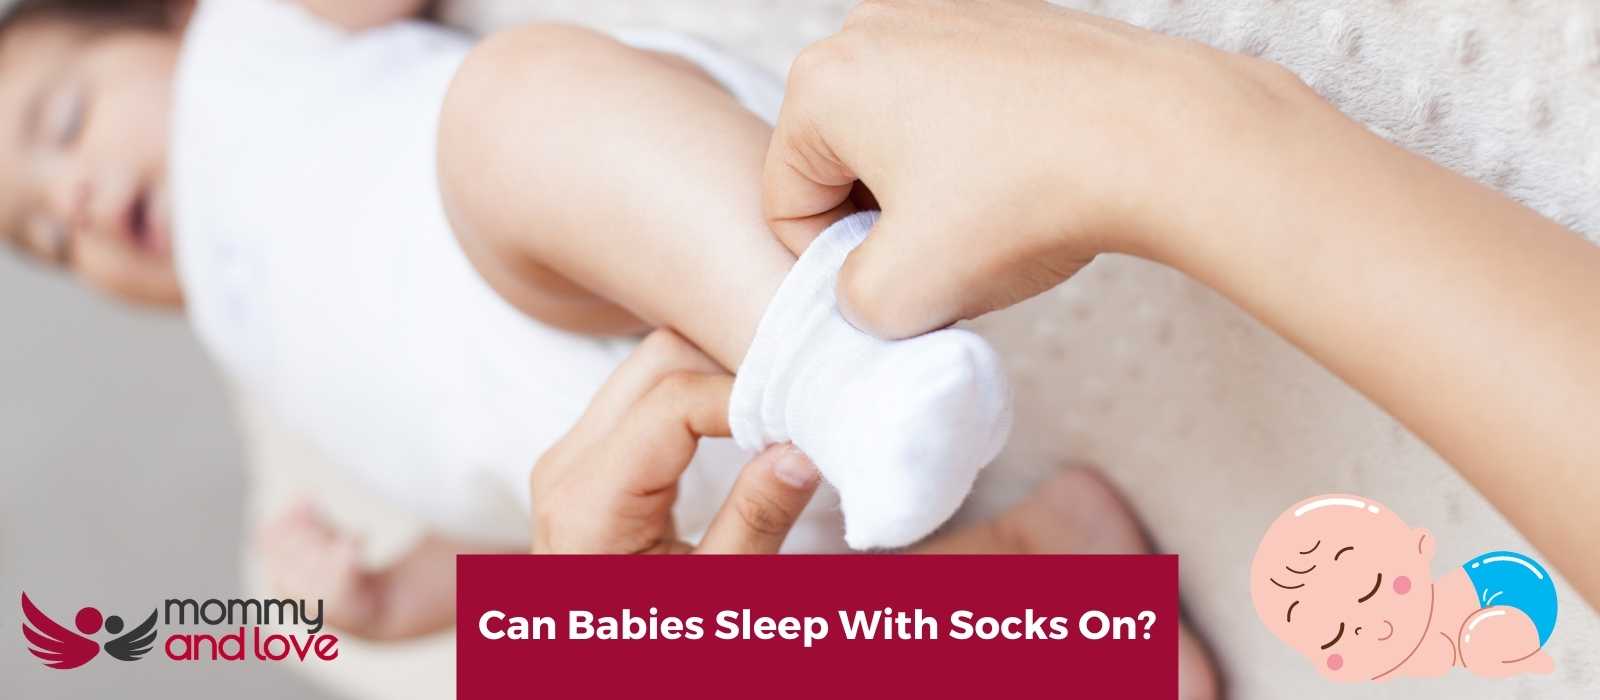 Can Babies Sleep With Socks On